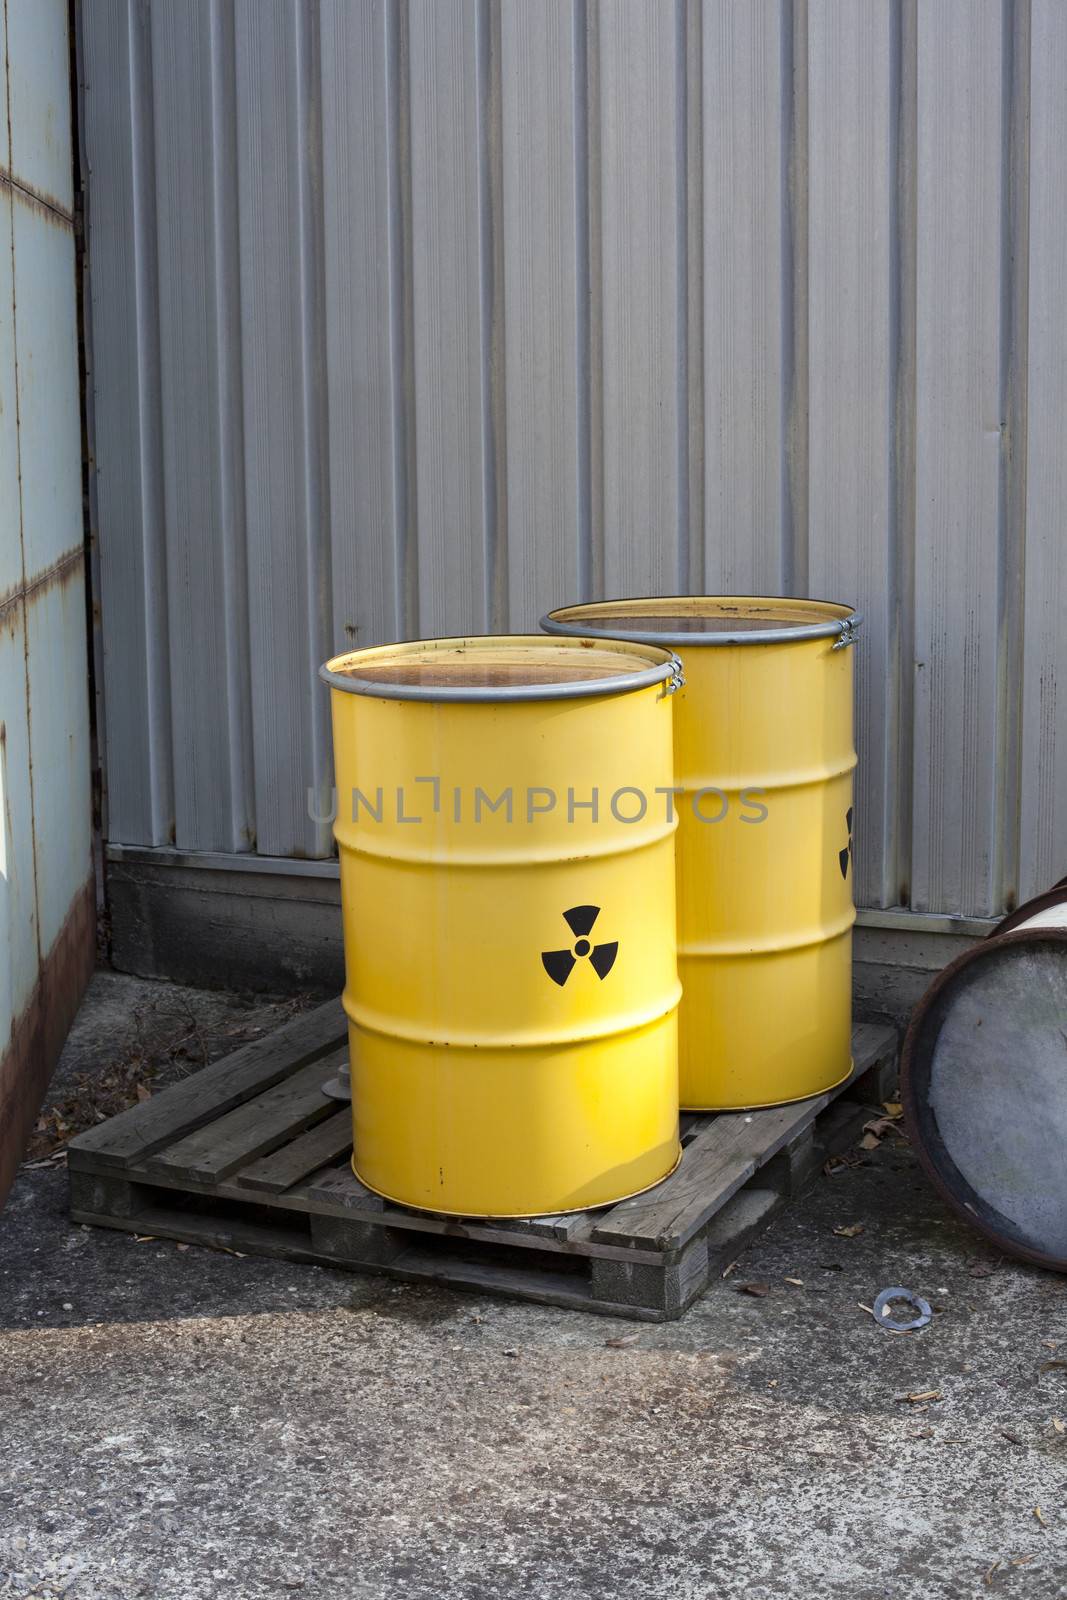 Abandoned radioactiv waste by wellphoto